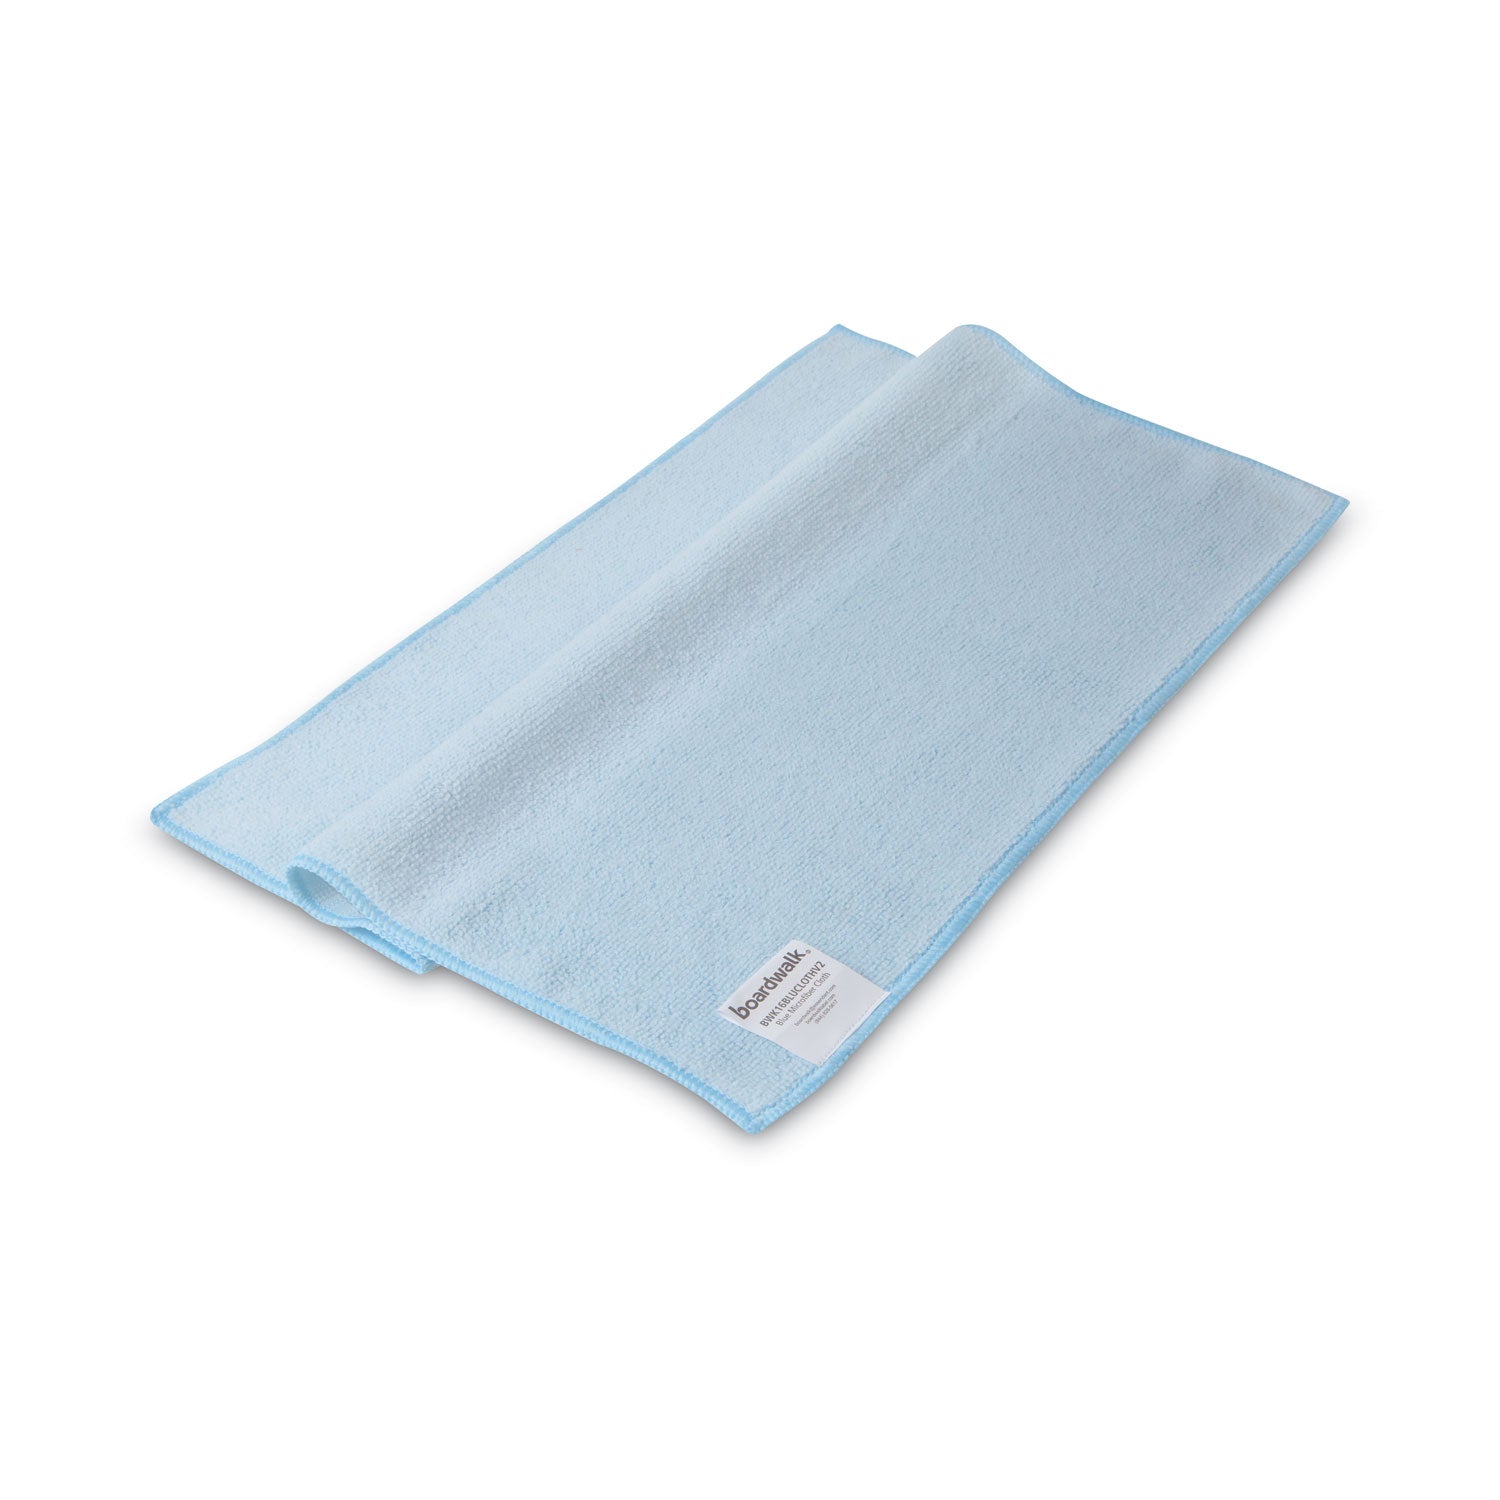 microfiber-cleaning-cloths-16-x-16-blue-24-pack_bwk16bluclothv2 - 2